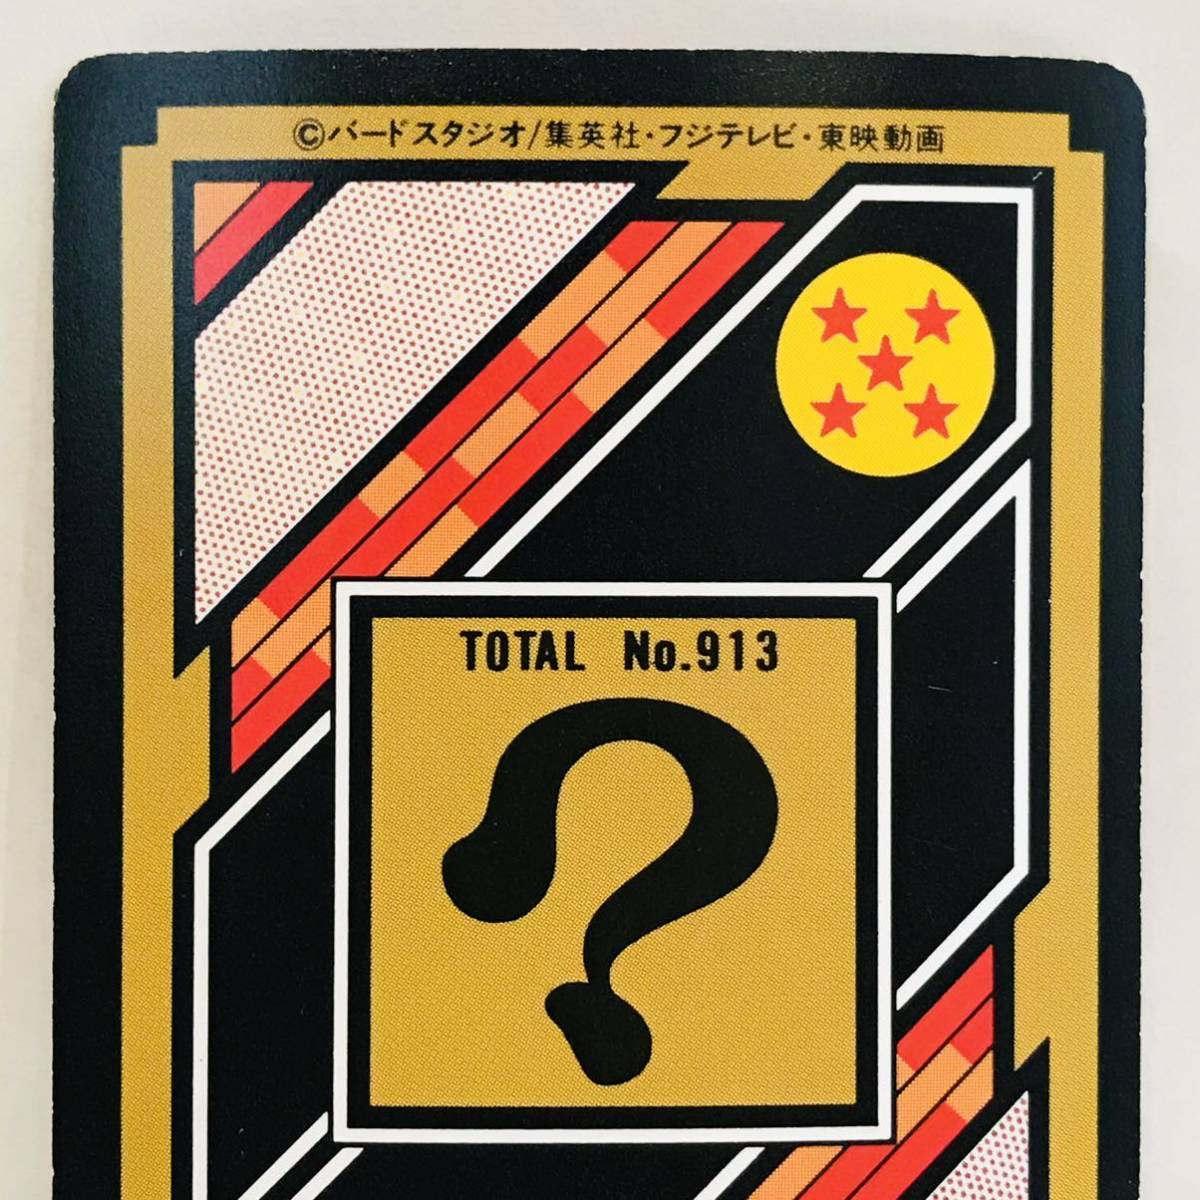  Carddas Dragon Ball Z. god bu compilation 267 (913)go ton ks